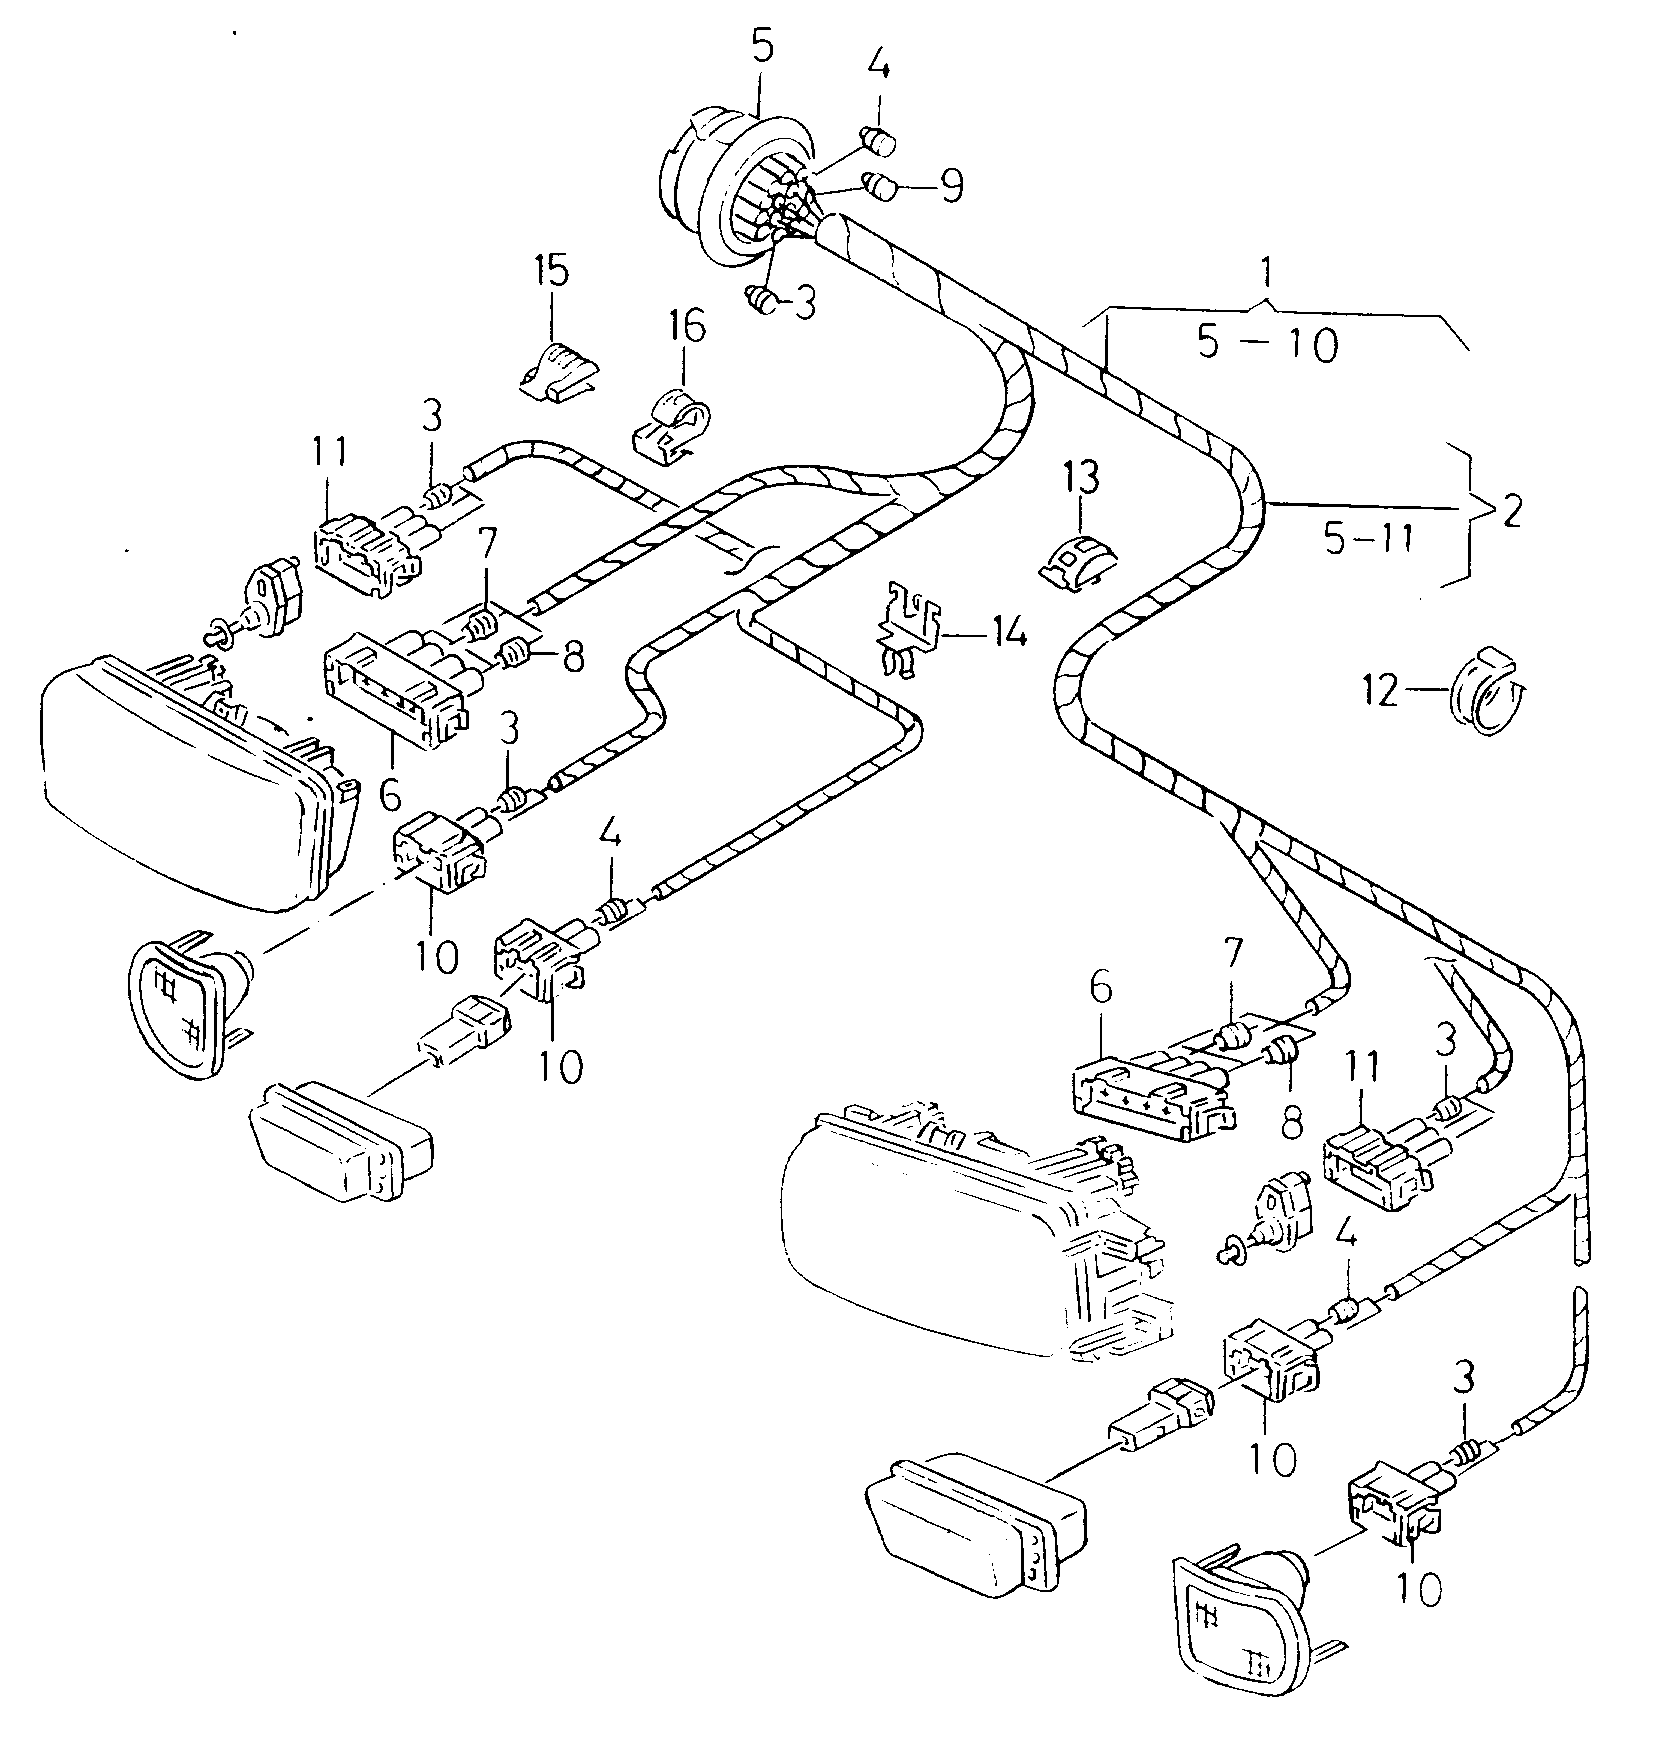 Individual parts  - Caddy - ca